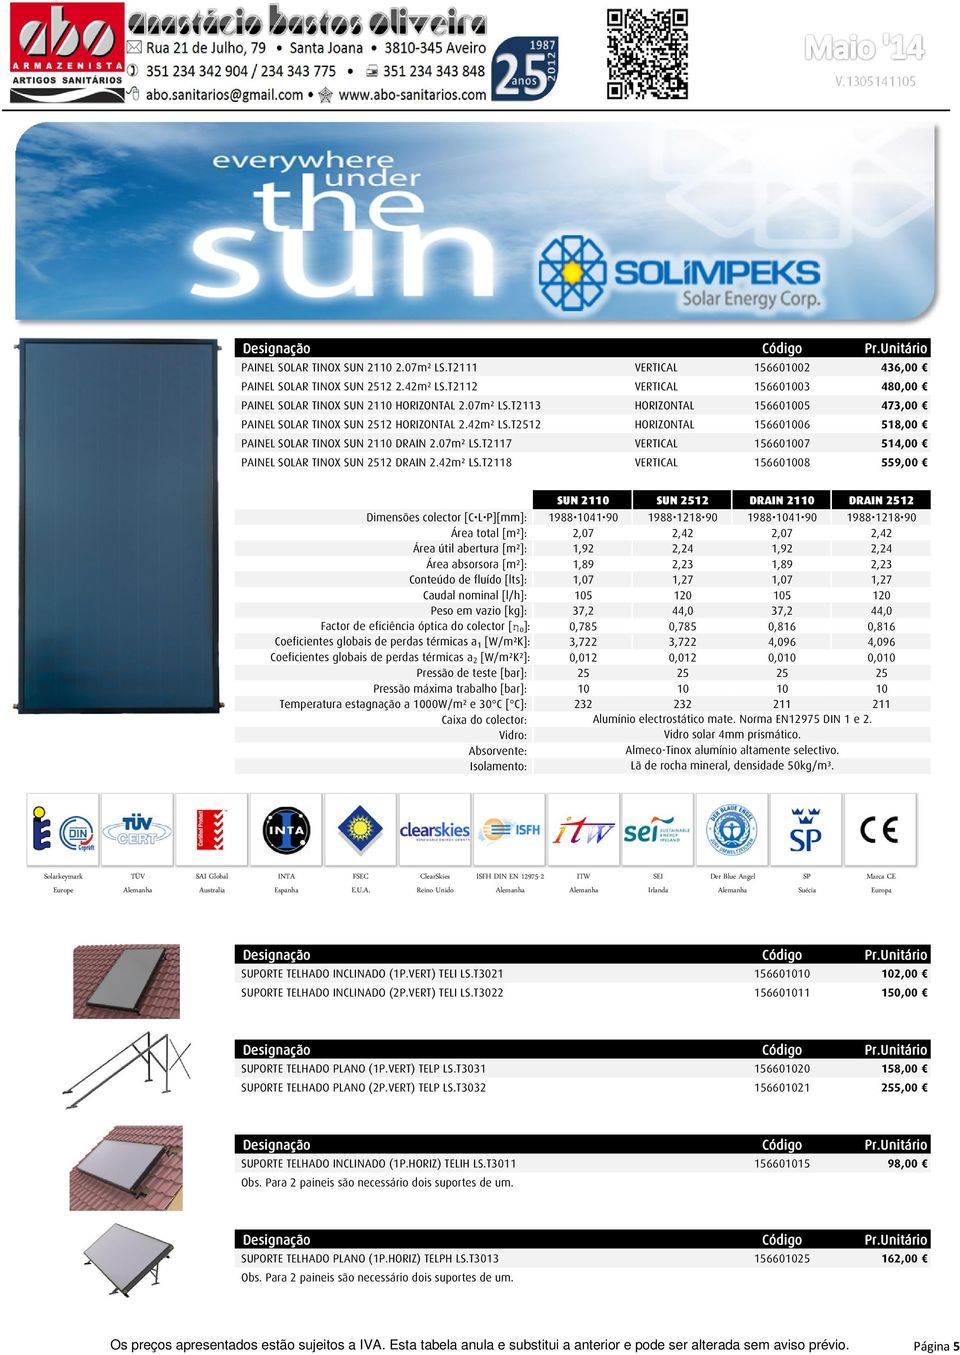 T2512 HORIZONTAL 156601006 518,00 PAINEL SOLAR TINOX SUN 2110 DRAIN 2.07m² LS.T2117 VERTICAL 156601007 514,00 PAINEL SOLAR TINOX SUN 2512 DRAIN 2.